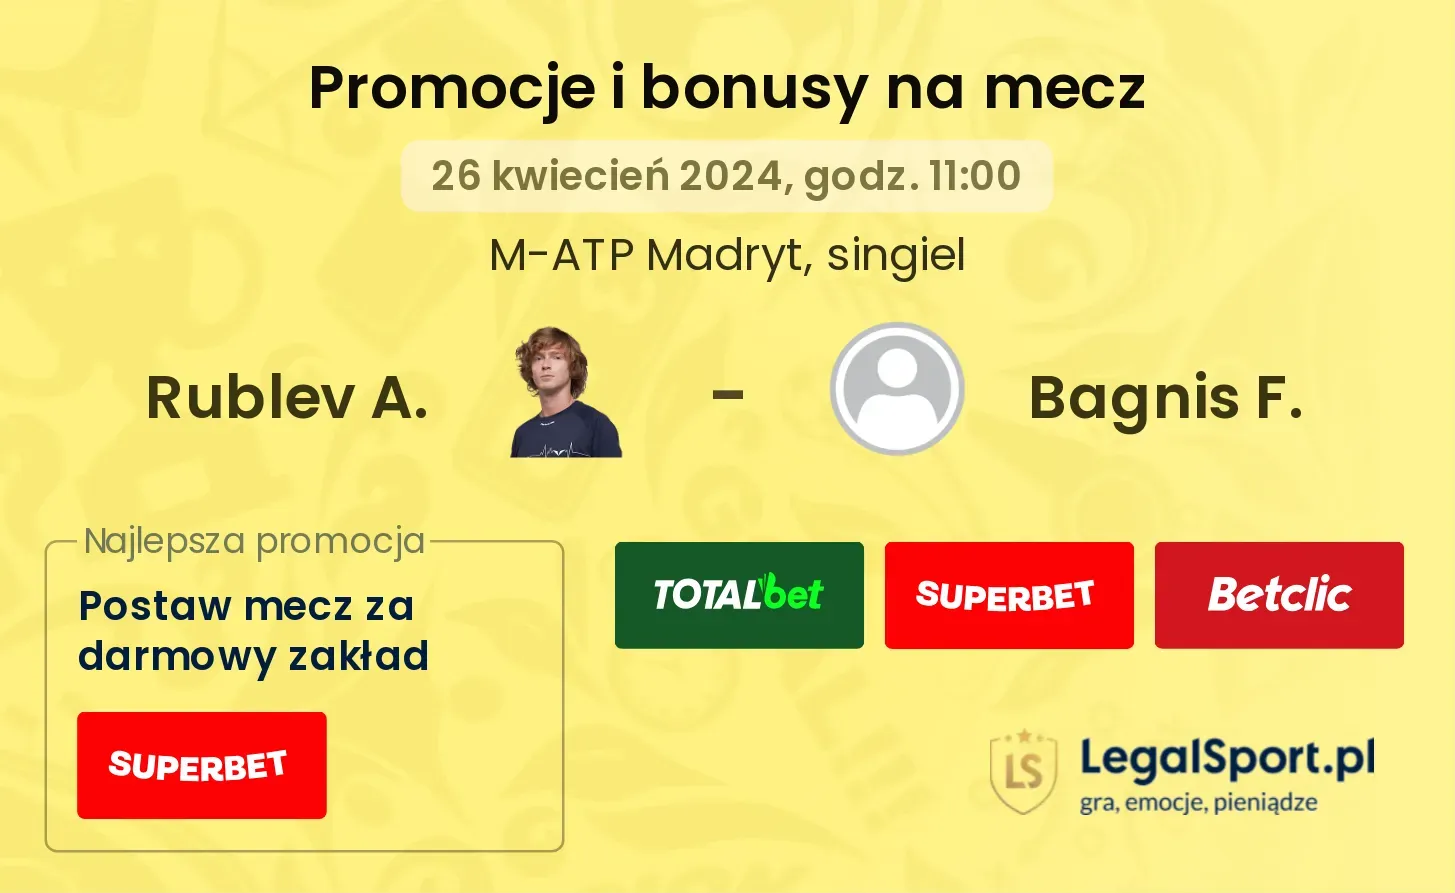 Rublev A. - Bagnis F. promocje bonusy na mecz